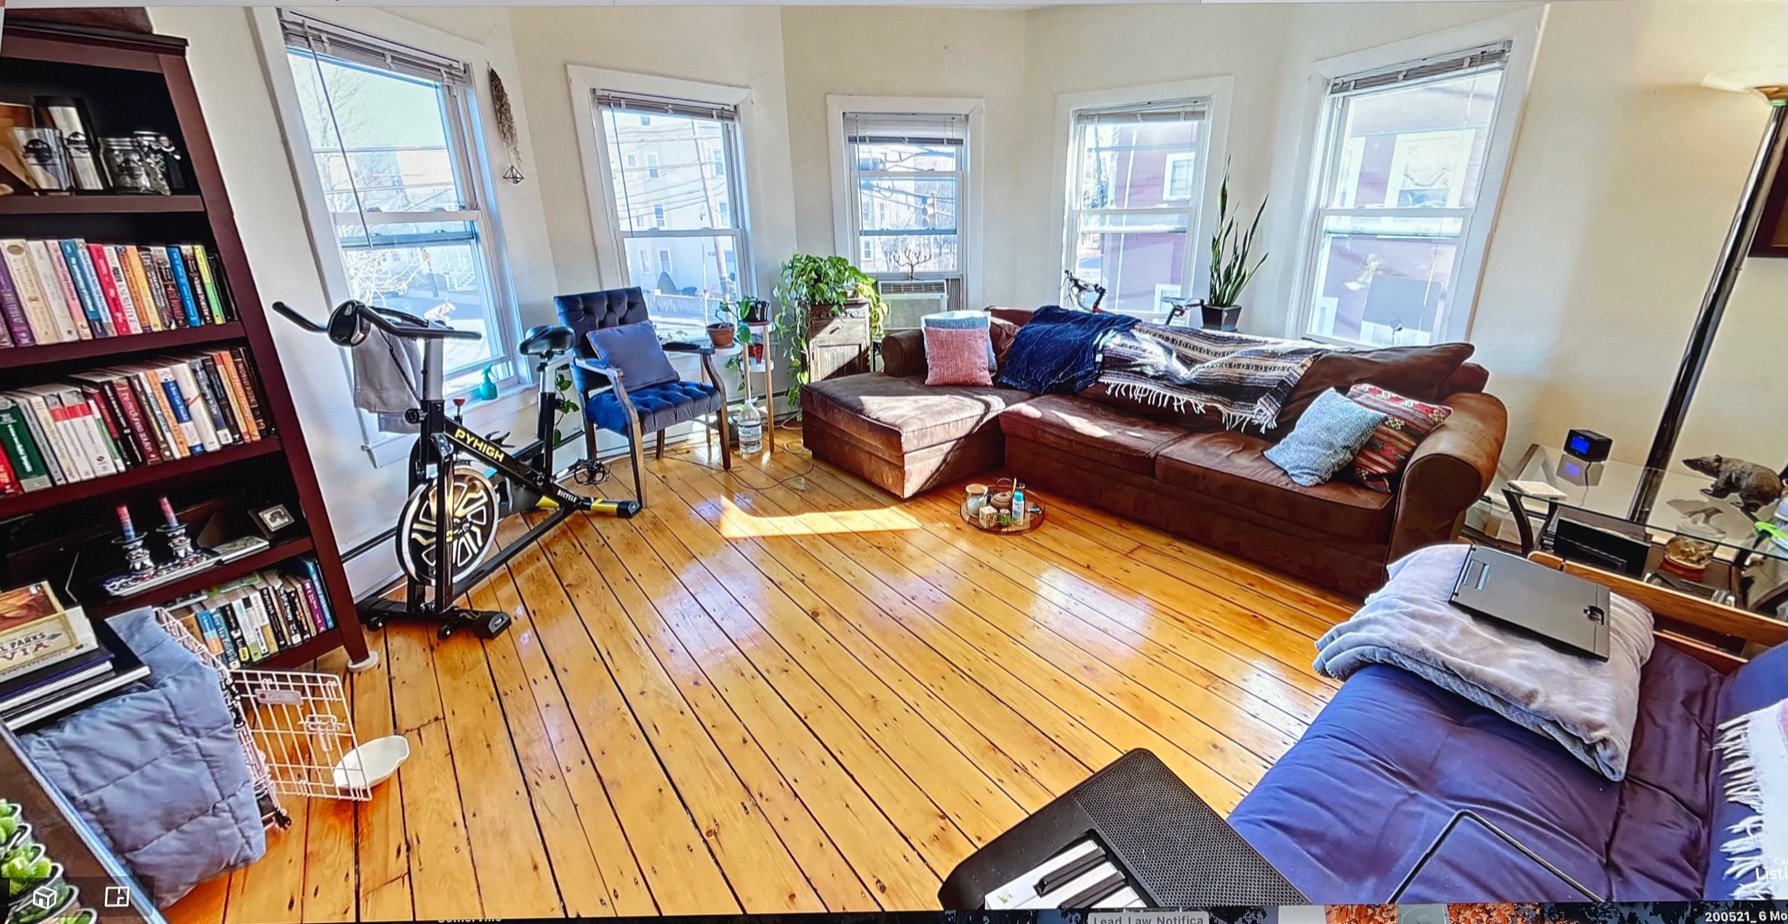 Photos of apartment on Washington St.,Somerville MA 02143